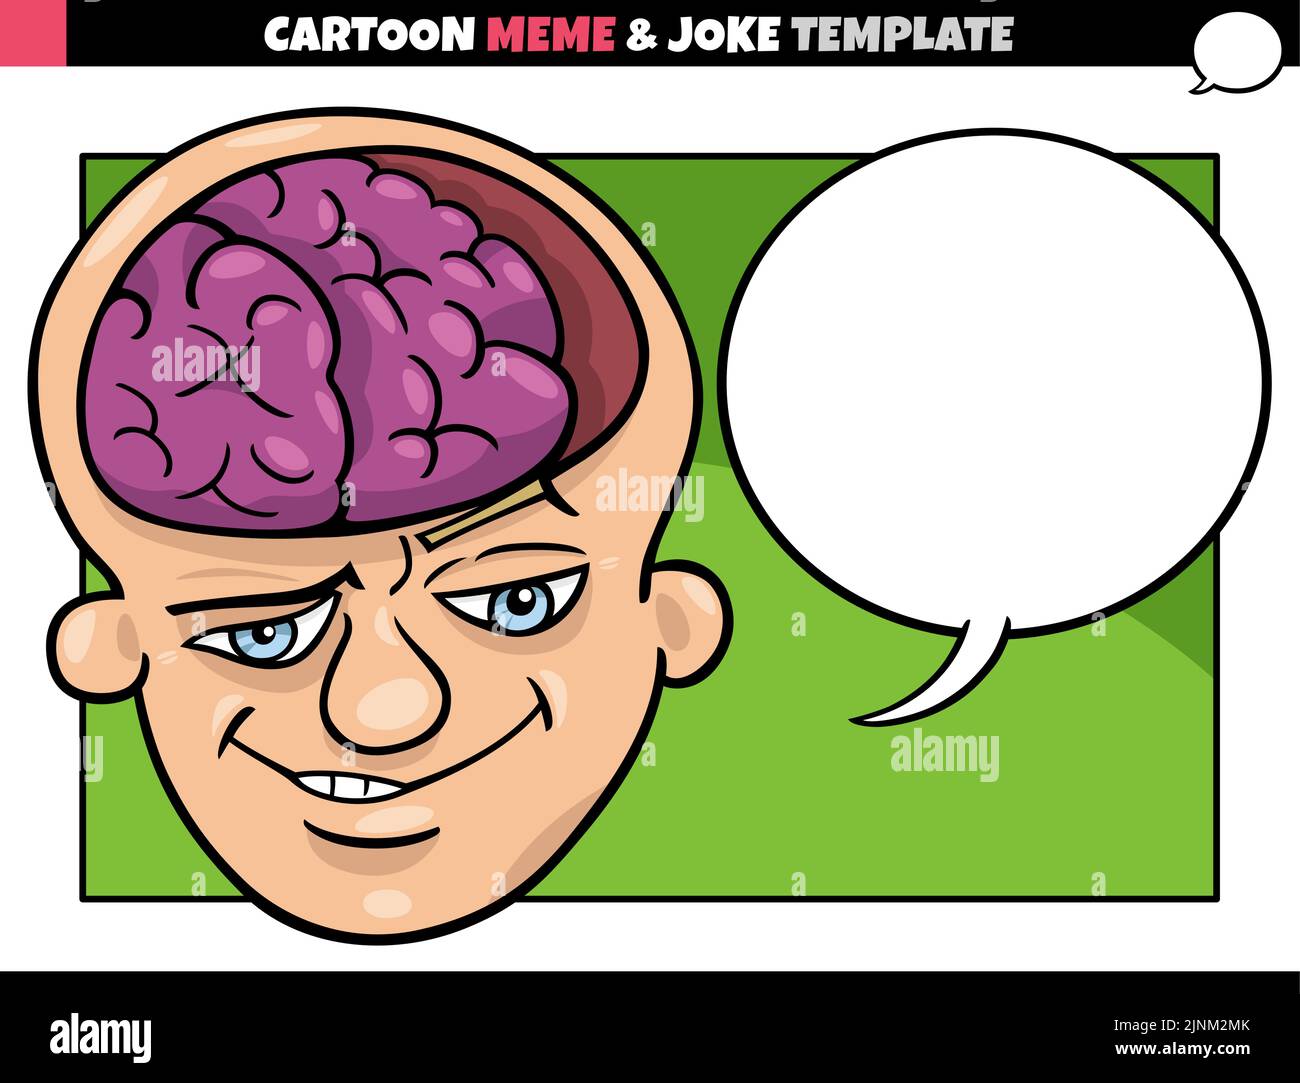 Meme Template Displeased Employee Stock Illustration - Download Image Now -  Meme, Humor, Admiration - iStock